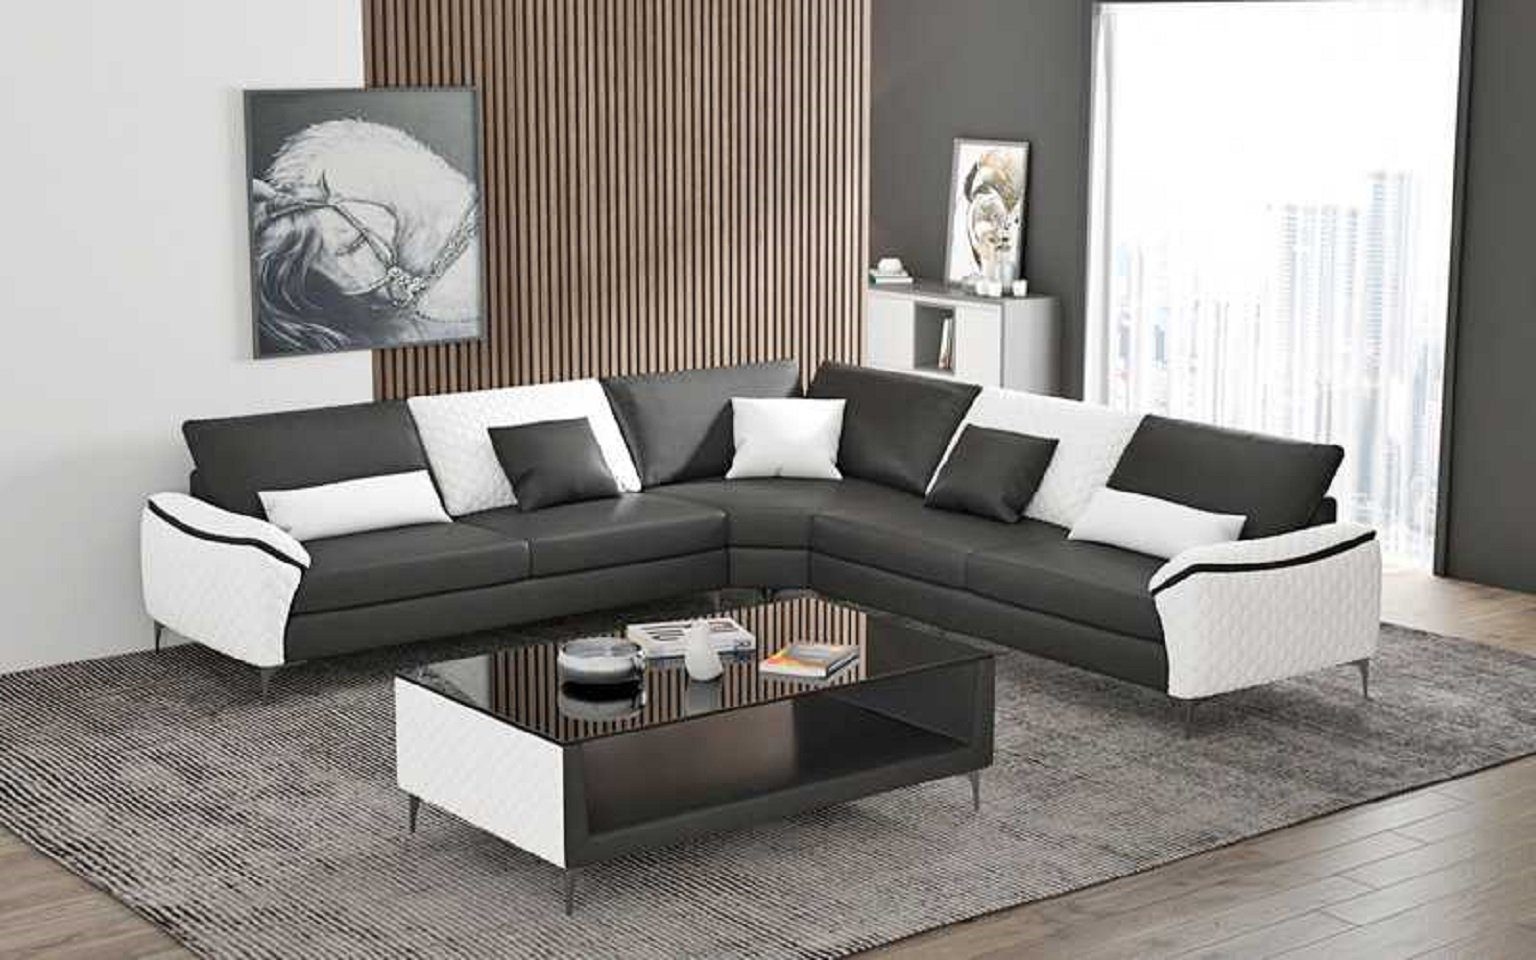 JVmoebel Ecksofa Teile, Eckgarnitur Luxus, Form L Schwarz in Design Ecksofa Couch Sofa Made 3 Europe Luxus